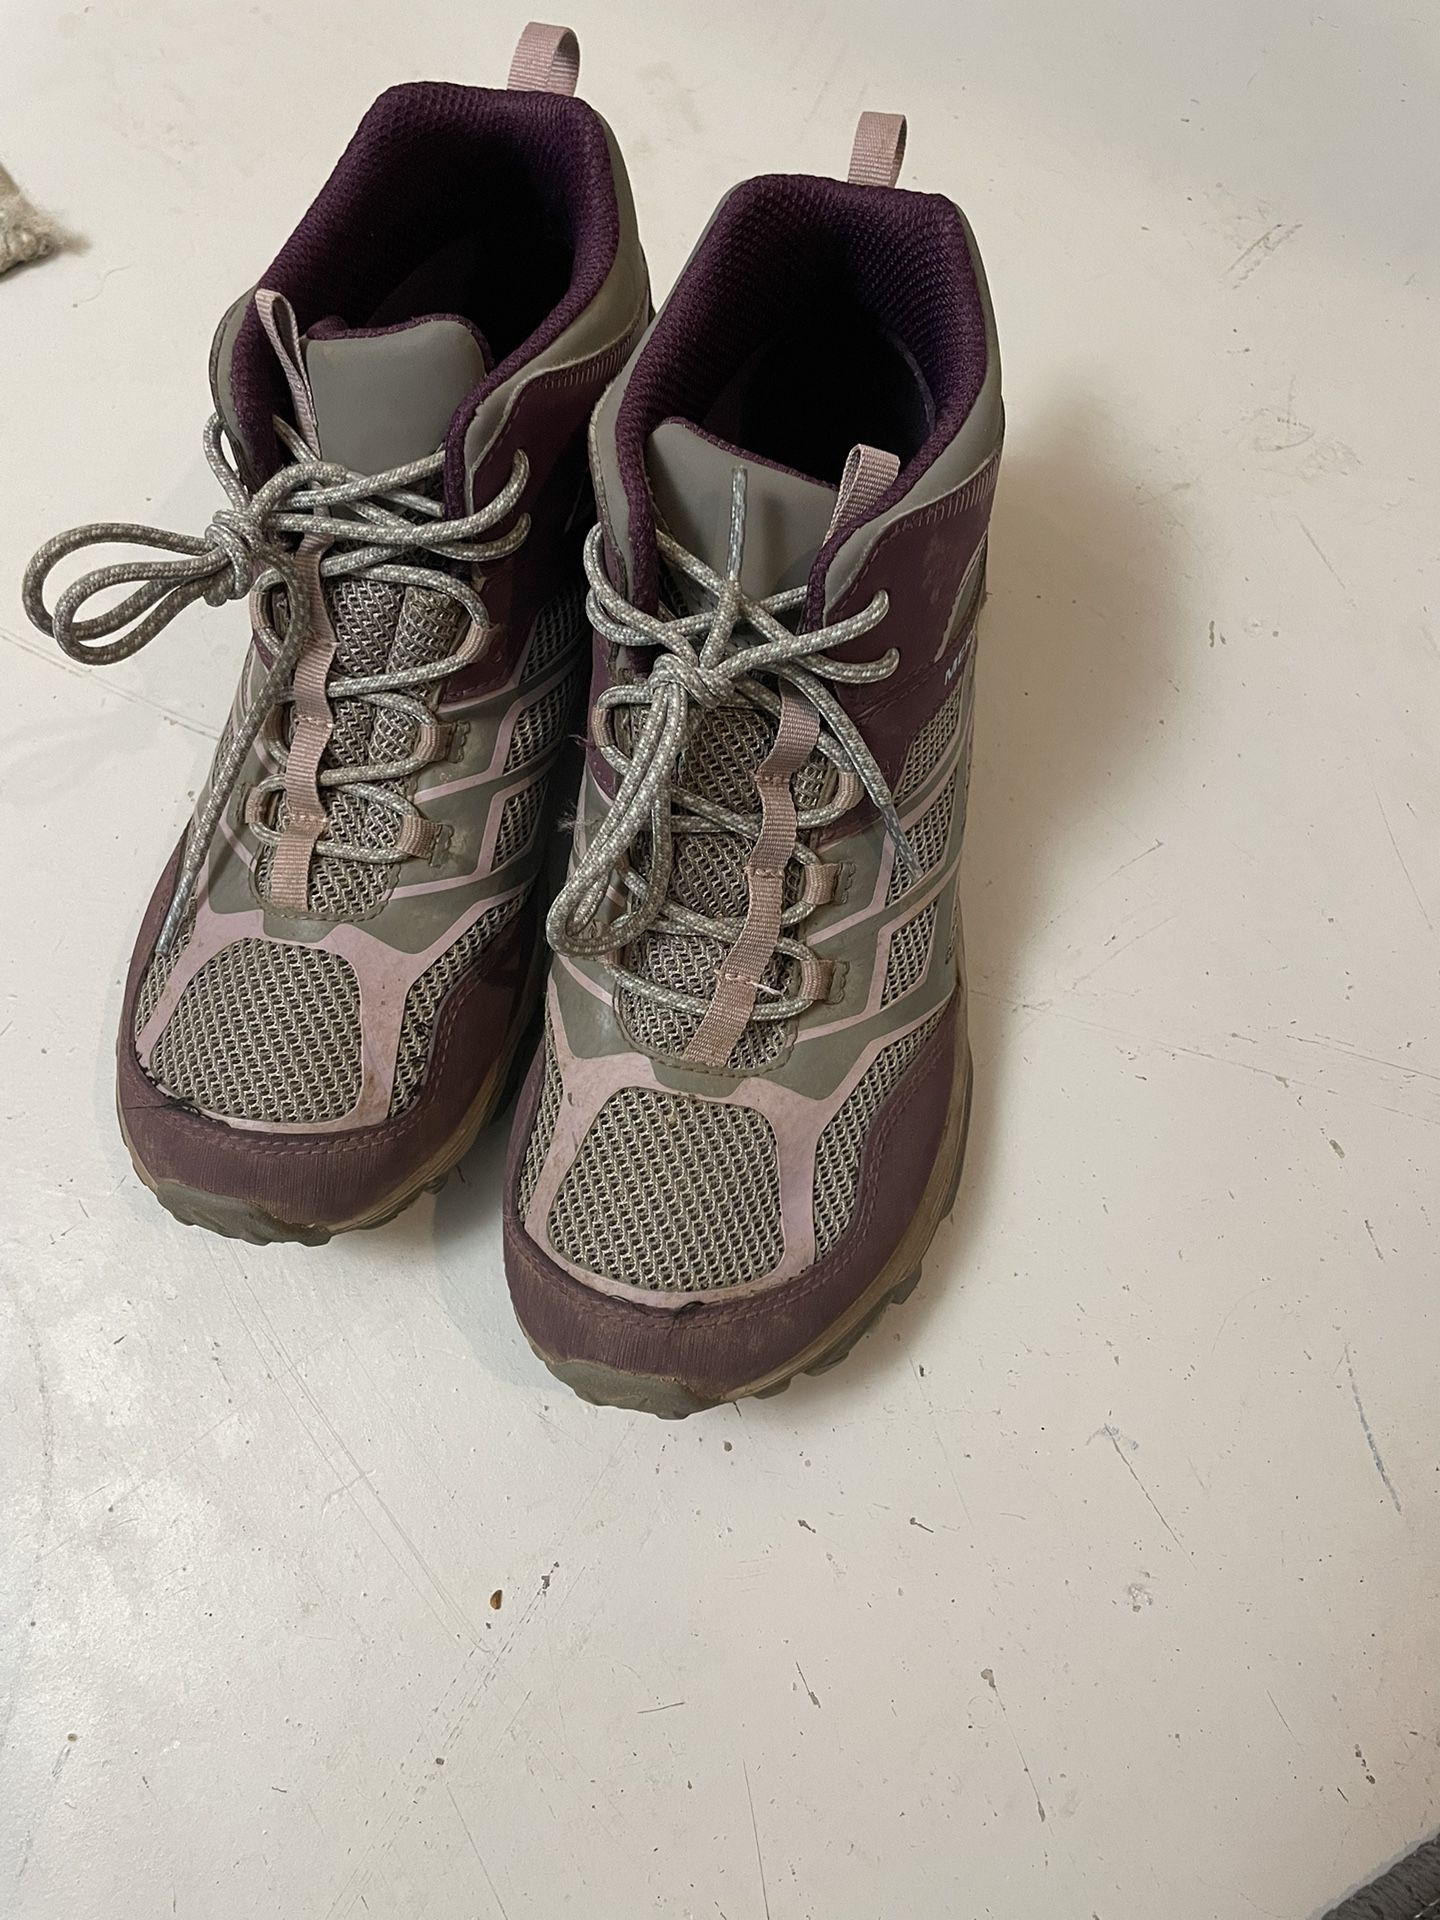 Merrill Girls/Womens Waterproof Hiking Boots, Size 6.5